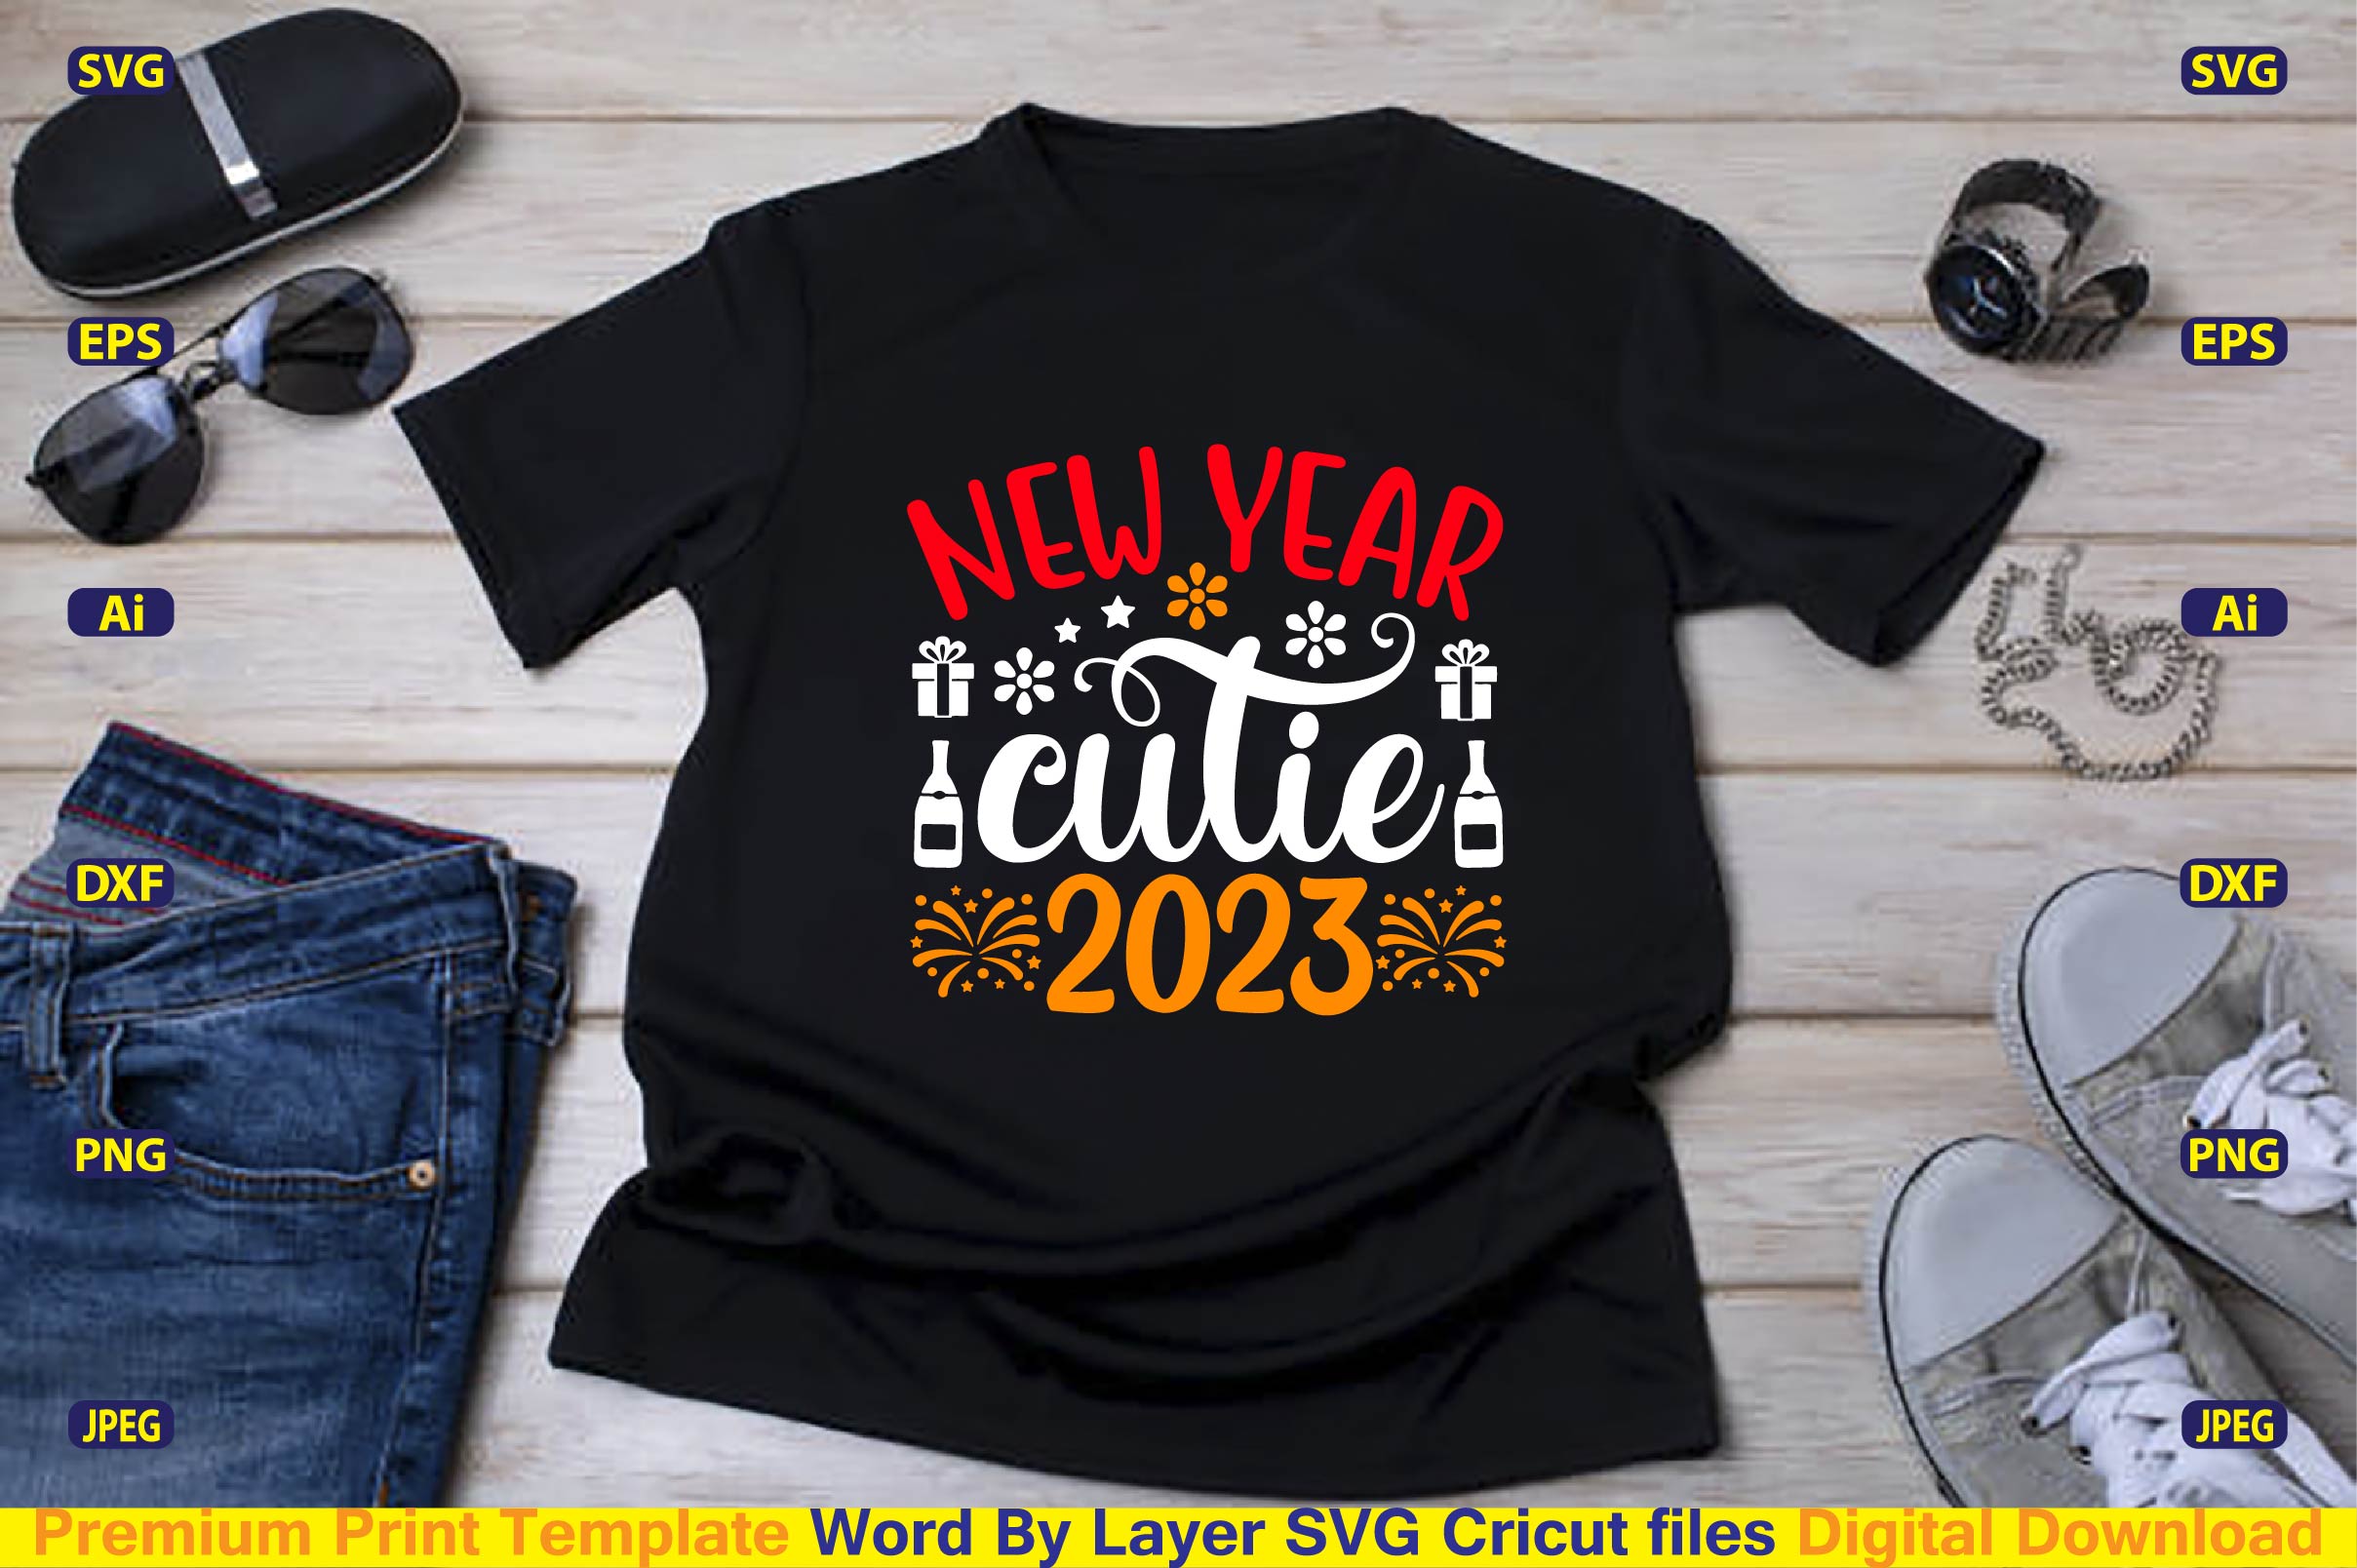 Cutie New Year T-Shirt Design Bundle prevew image.